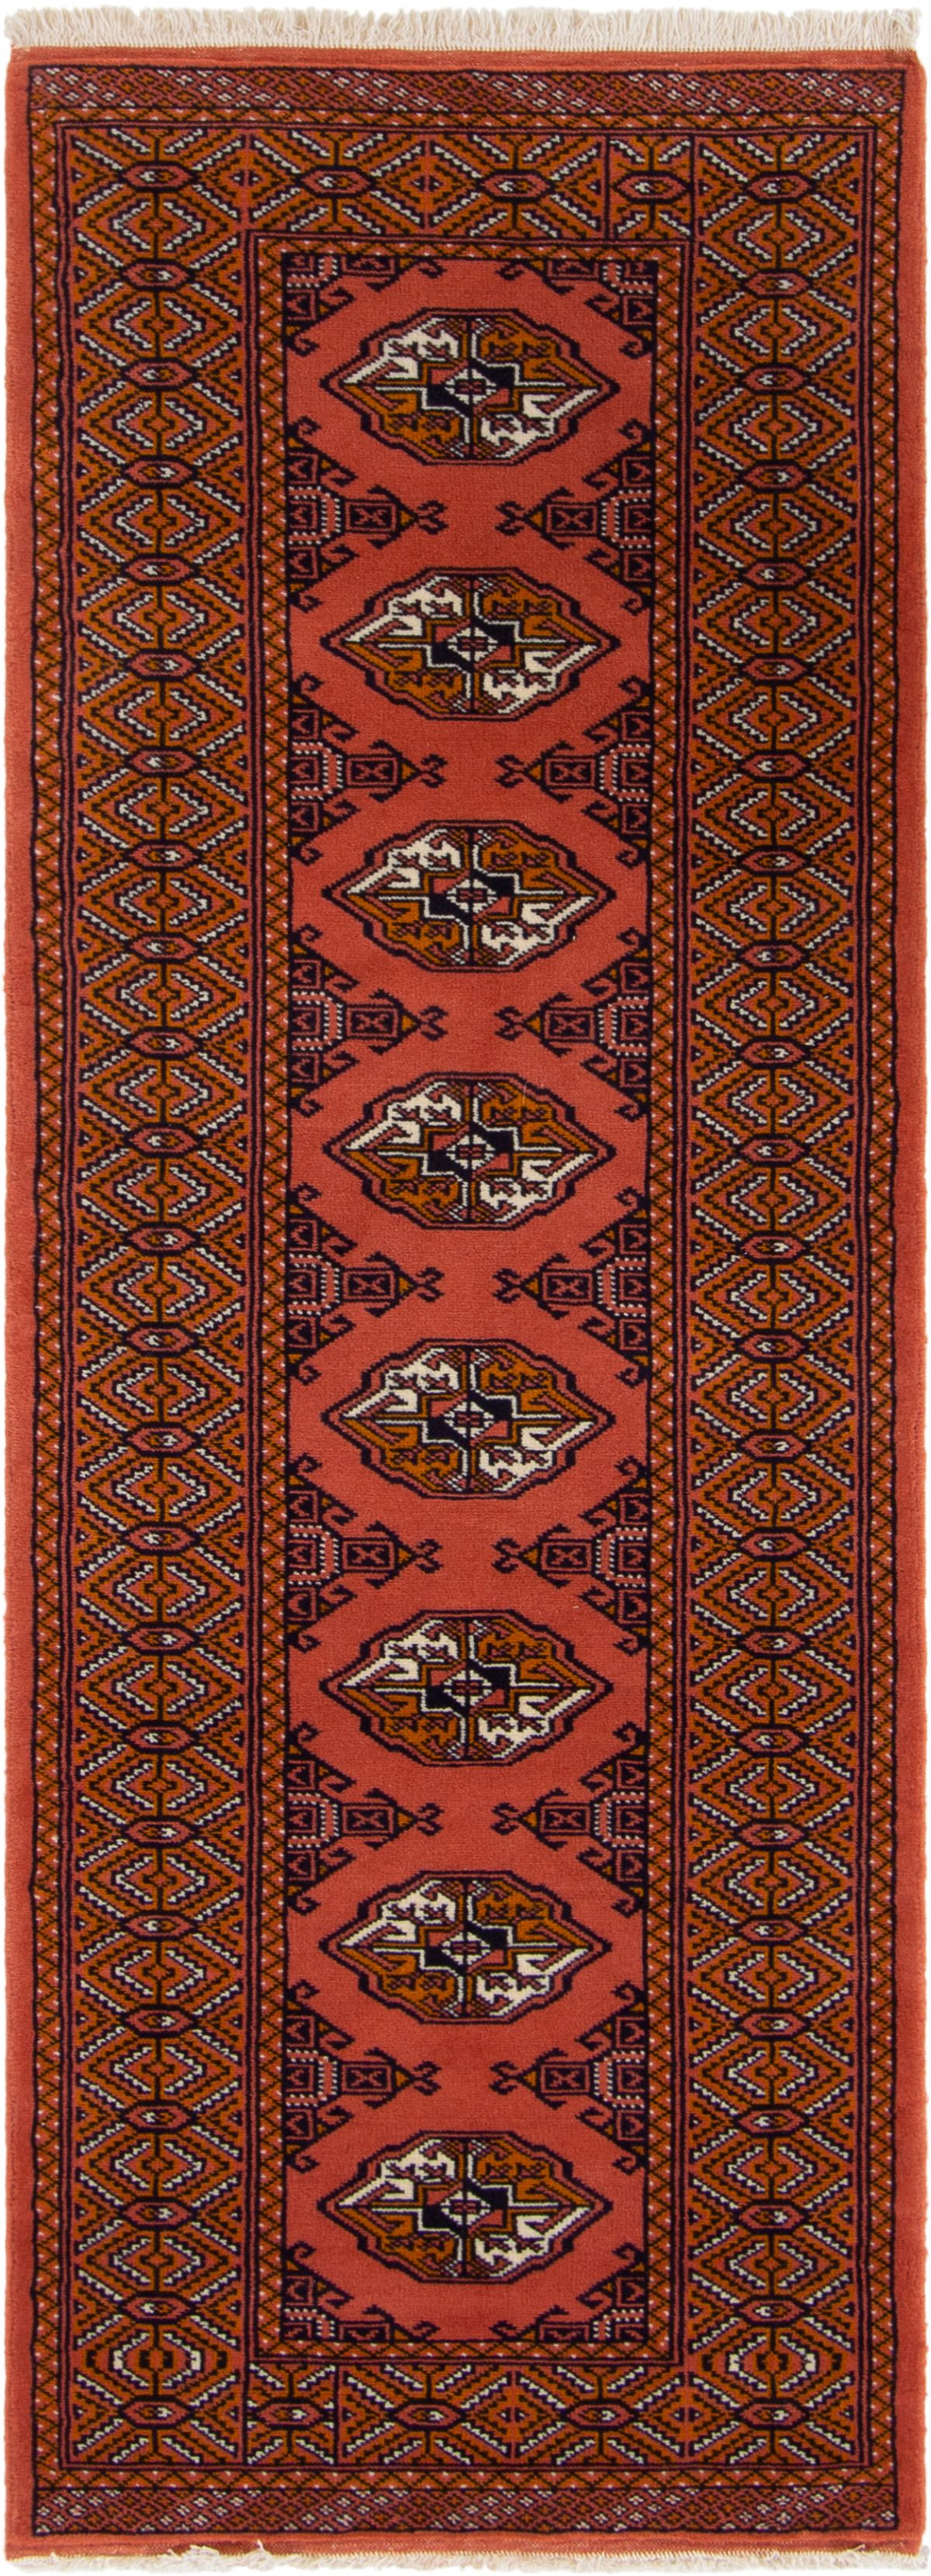 Hand-knotted Turkoman  Wool Rug 2'8" x 7'6" Size: 2'7" x 7'6"  